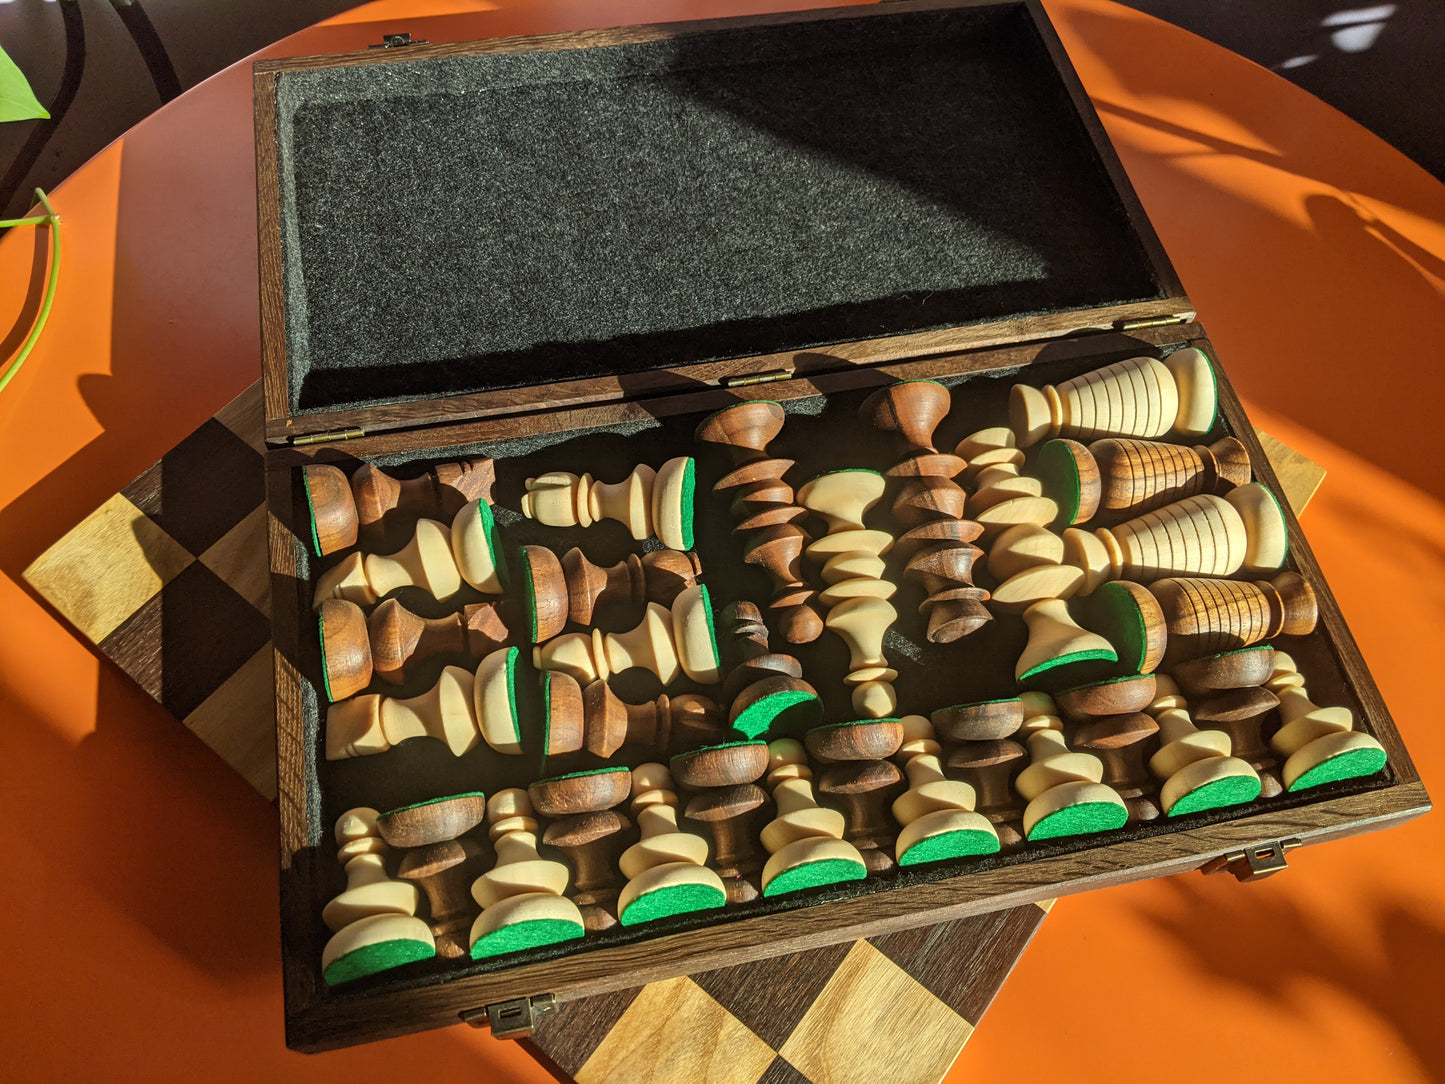 Early English Chess Set. Handmade. Walnut & Maple wood